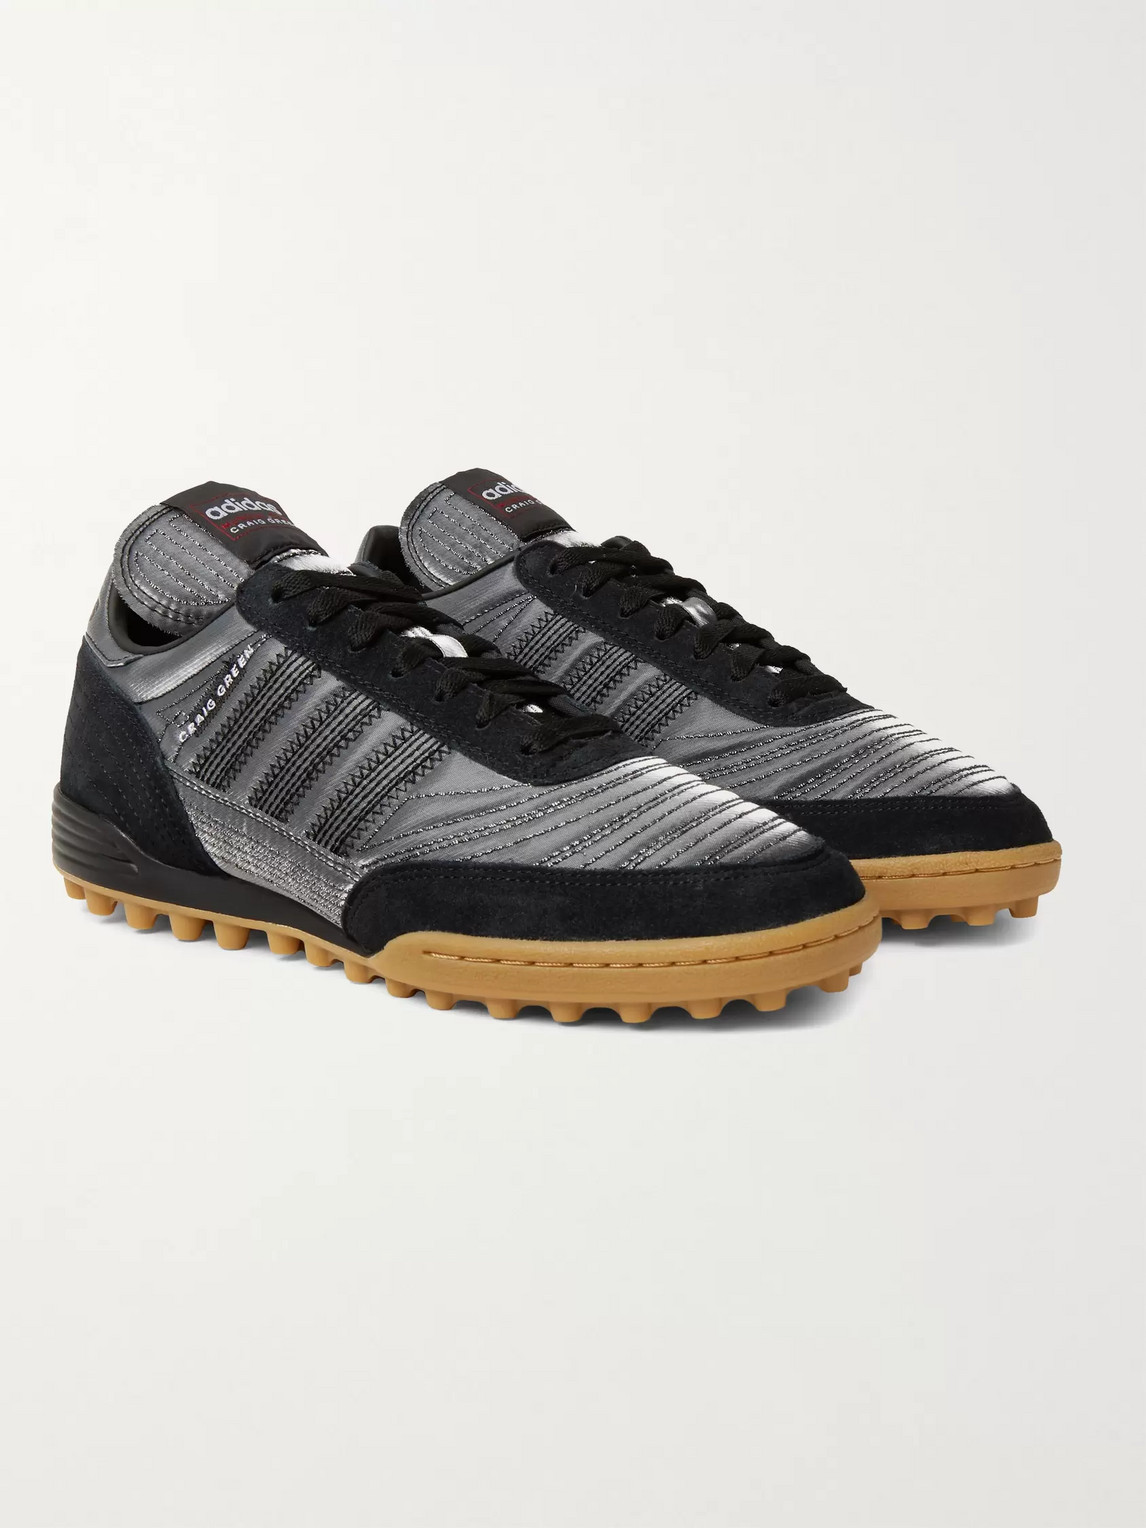 Adidas Consortium Craig Green Kontuur Iii Suede And Metallic Canvas Sneakers In Black